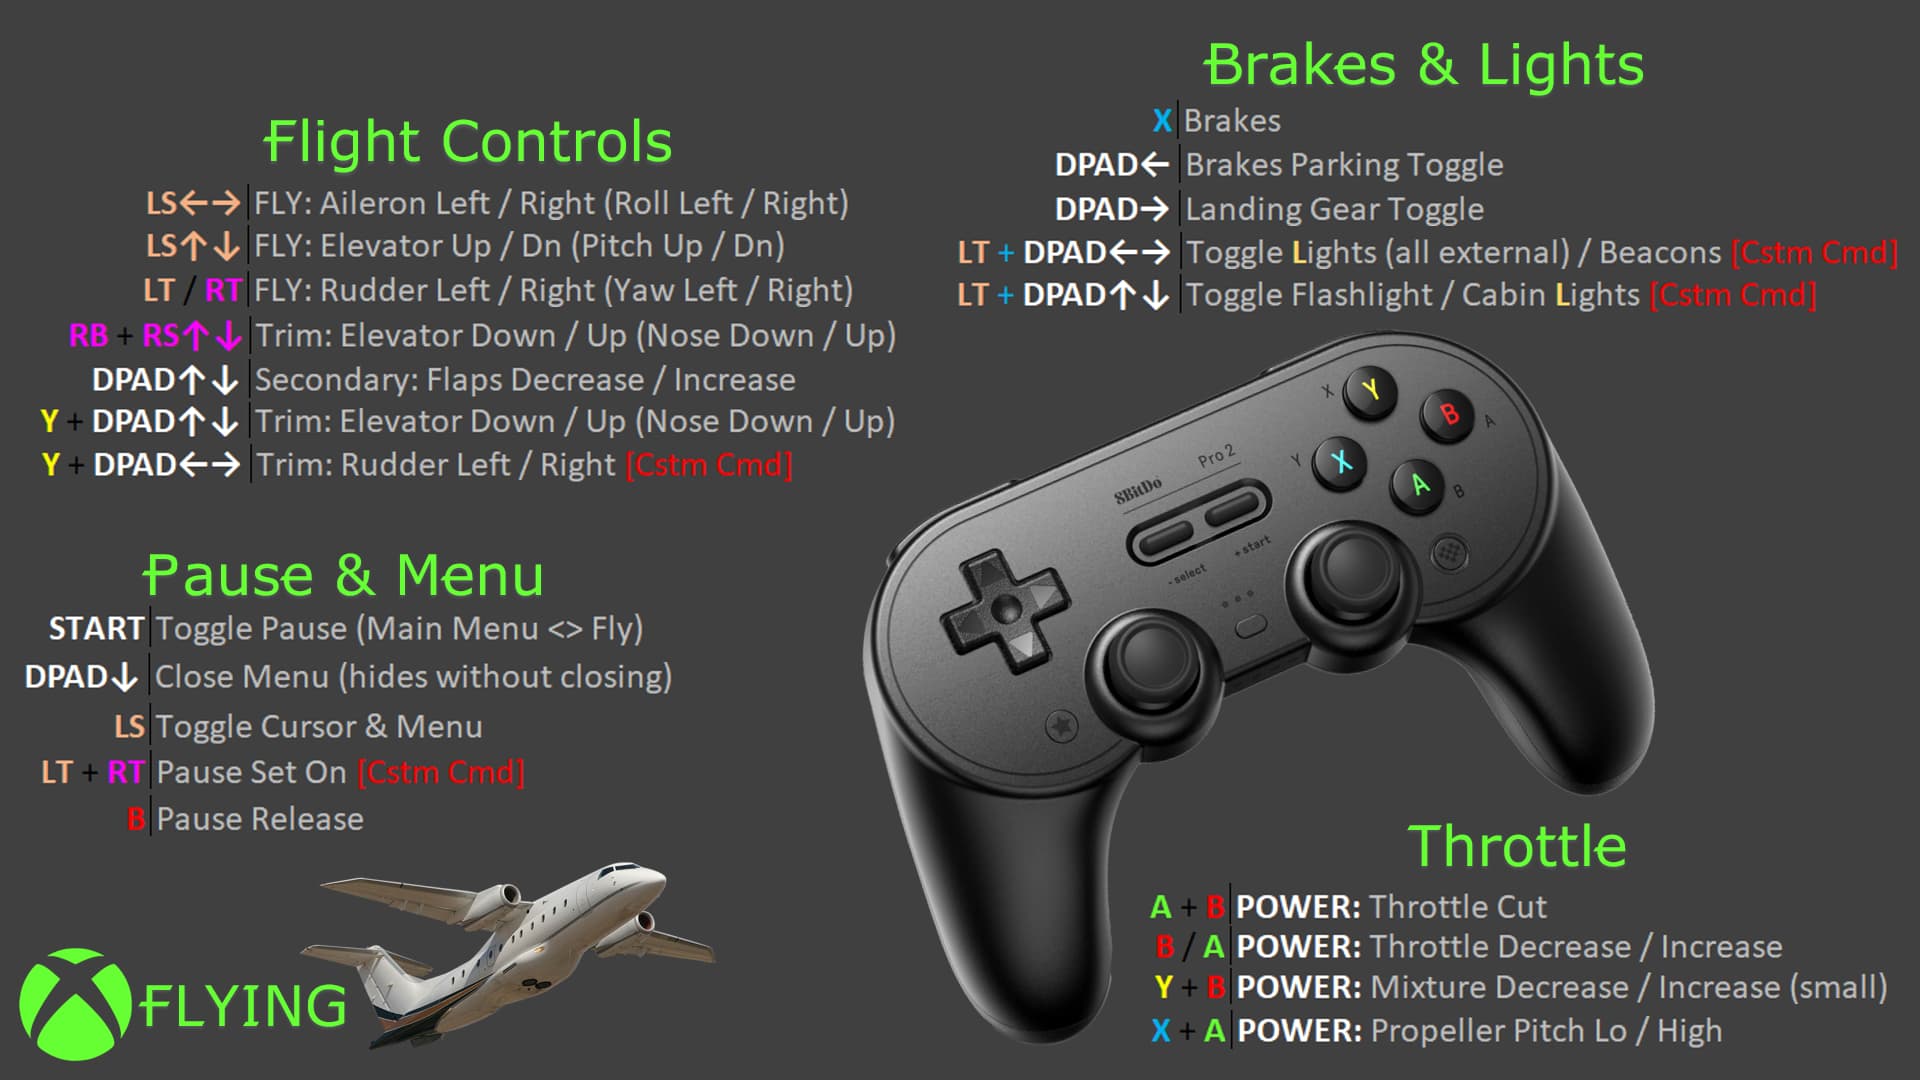 Microsoft Flight Simulator Xbox controller up for pre-order Nov